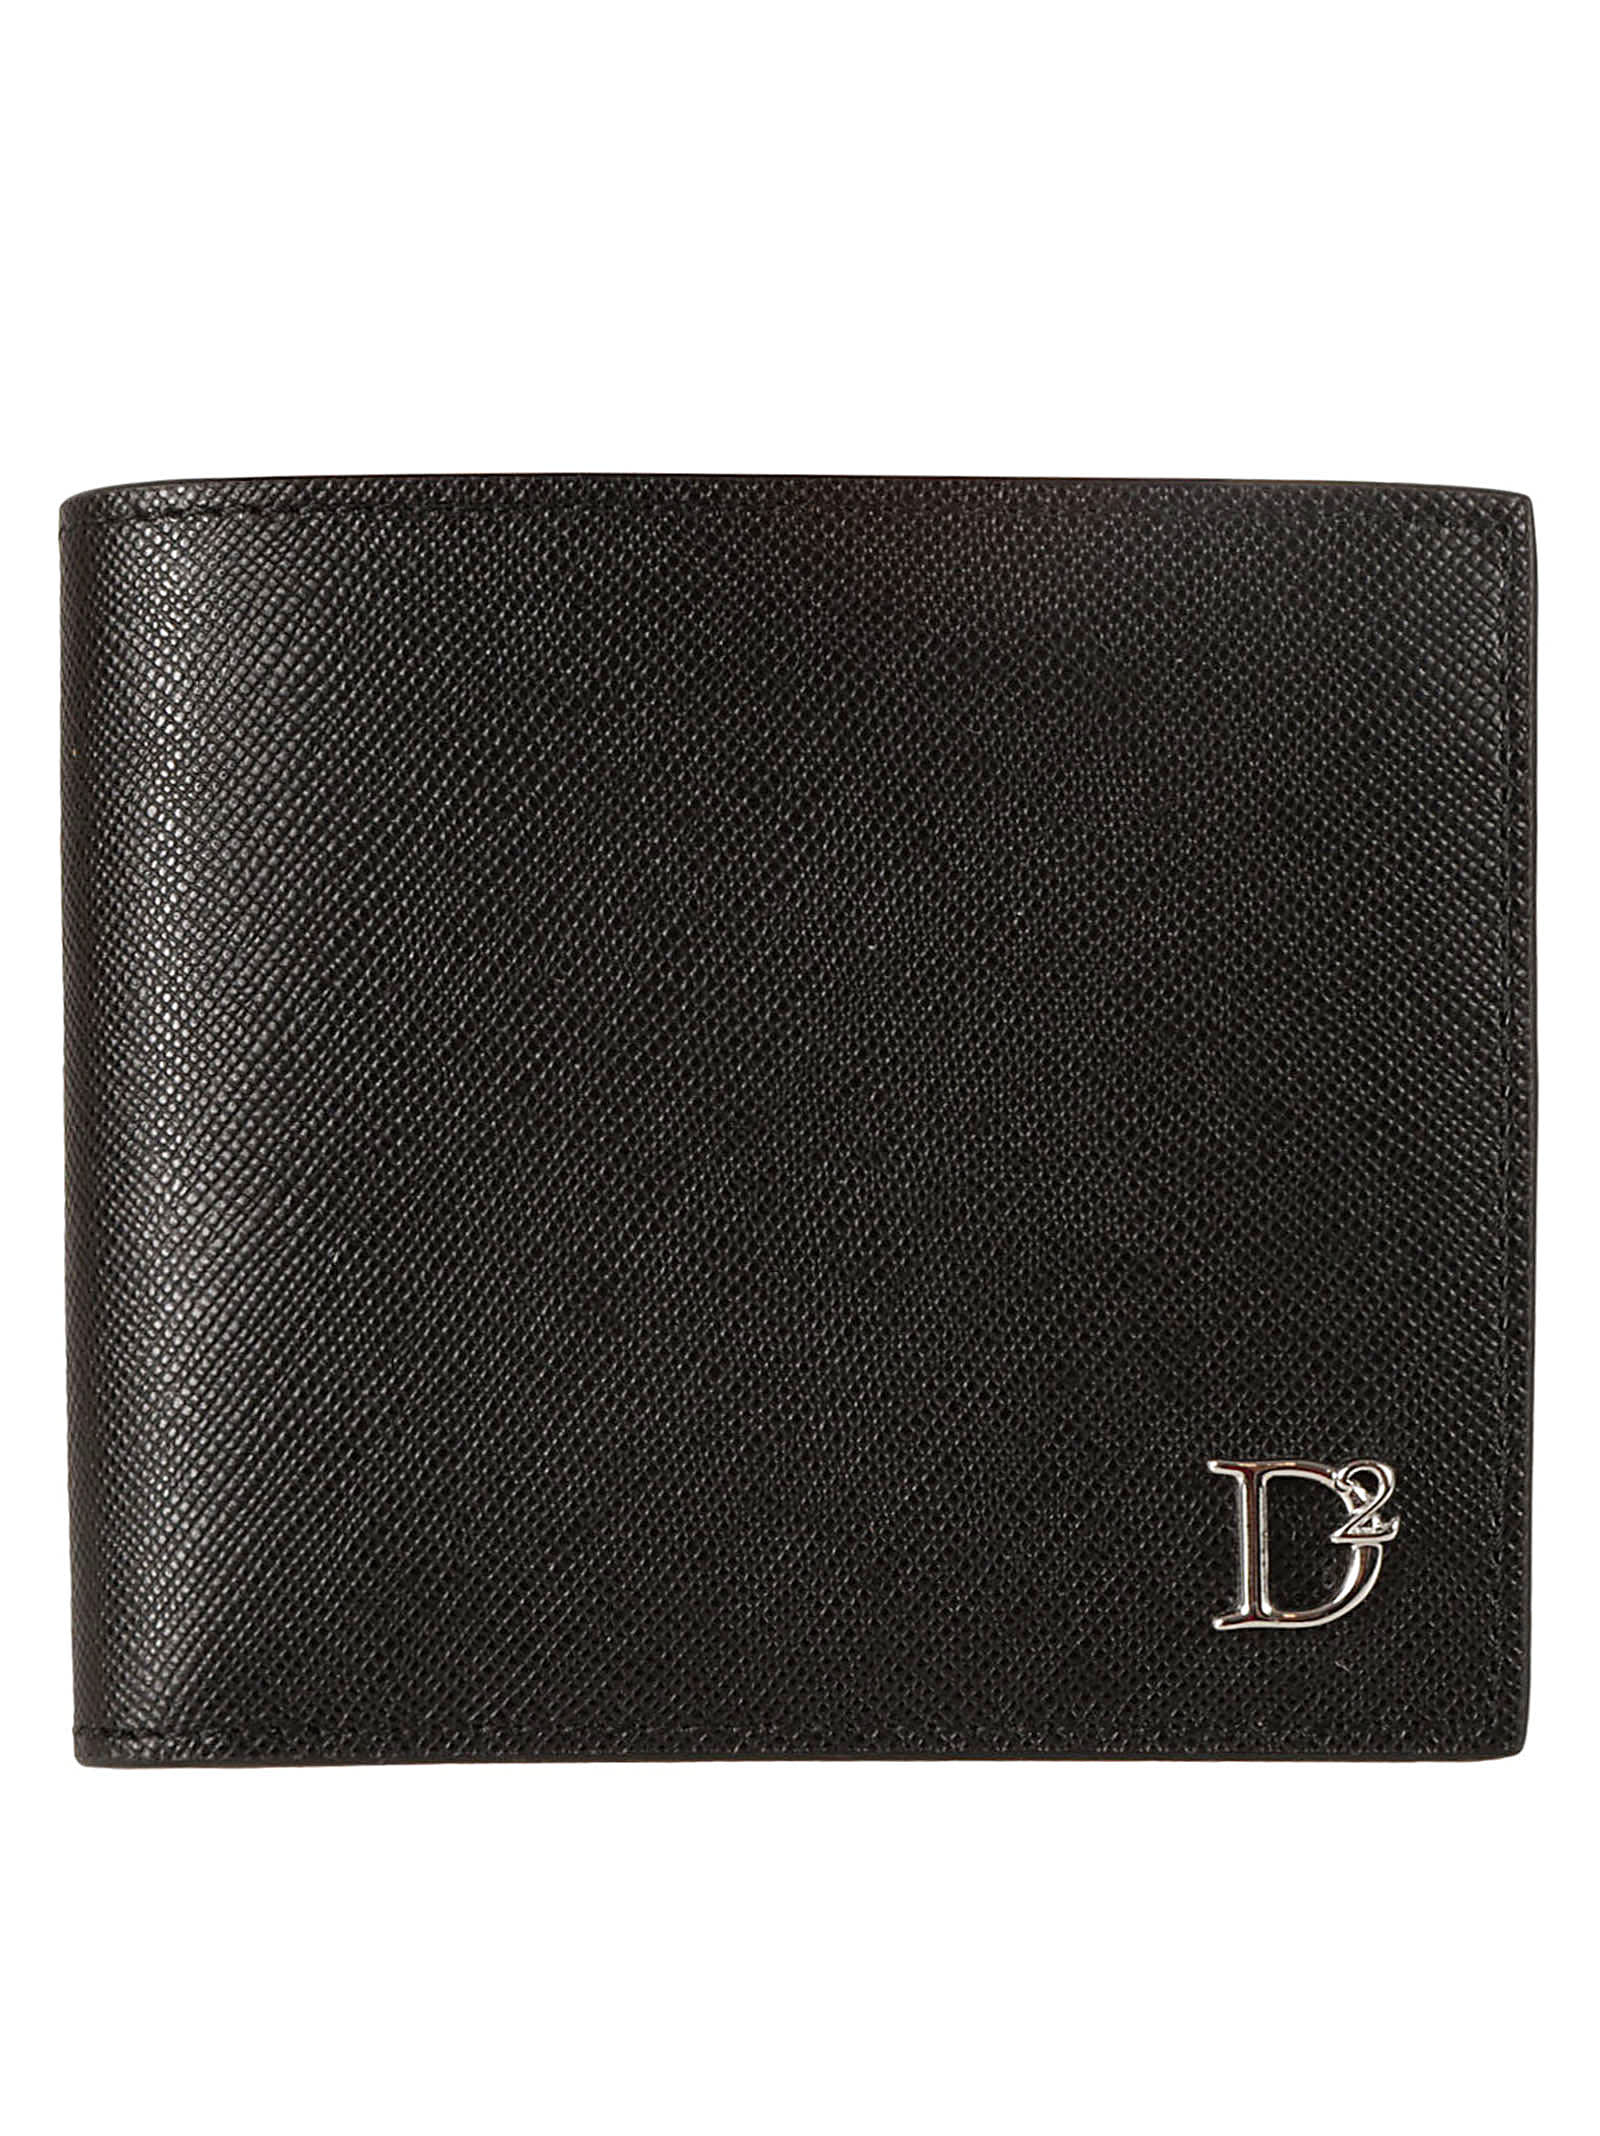 Dsquared2 Wallet Coin Case In Black/orange